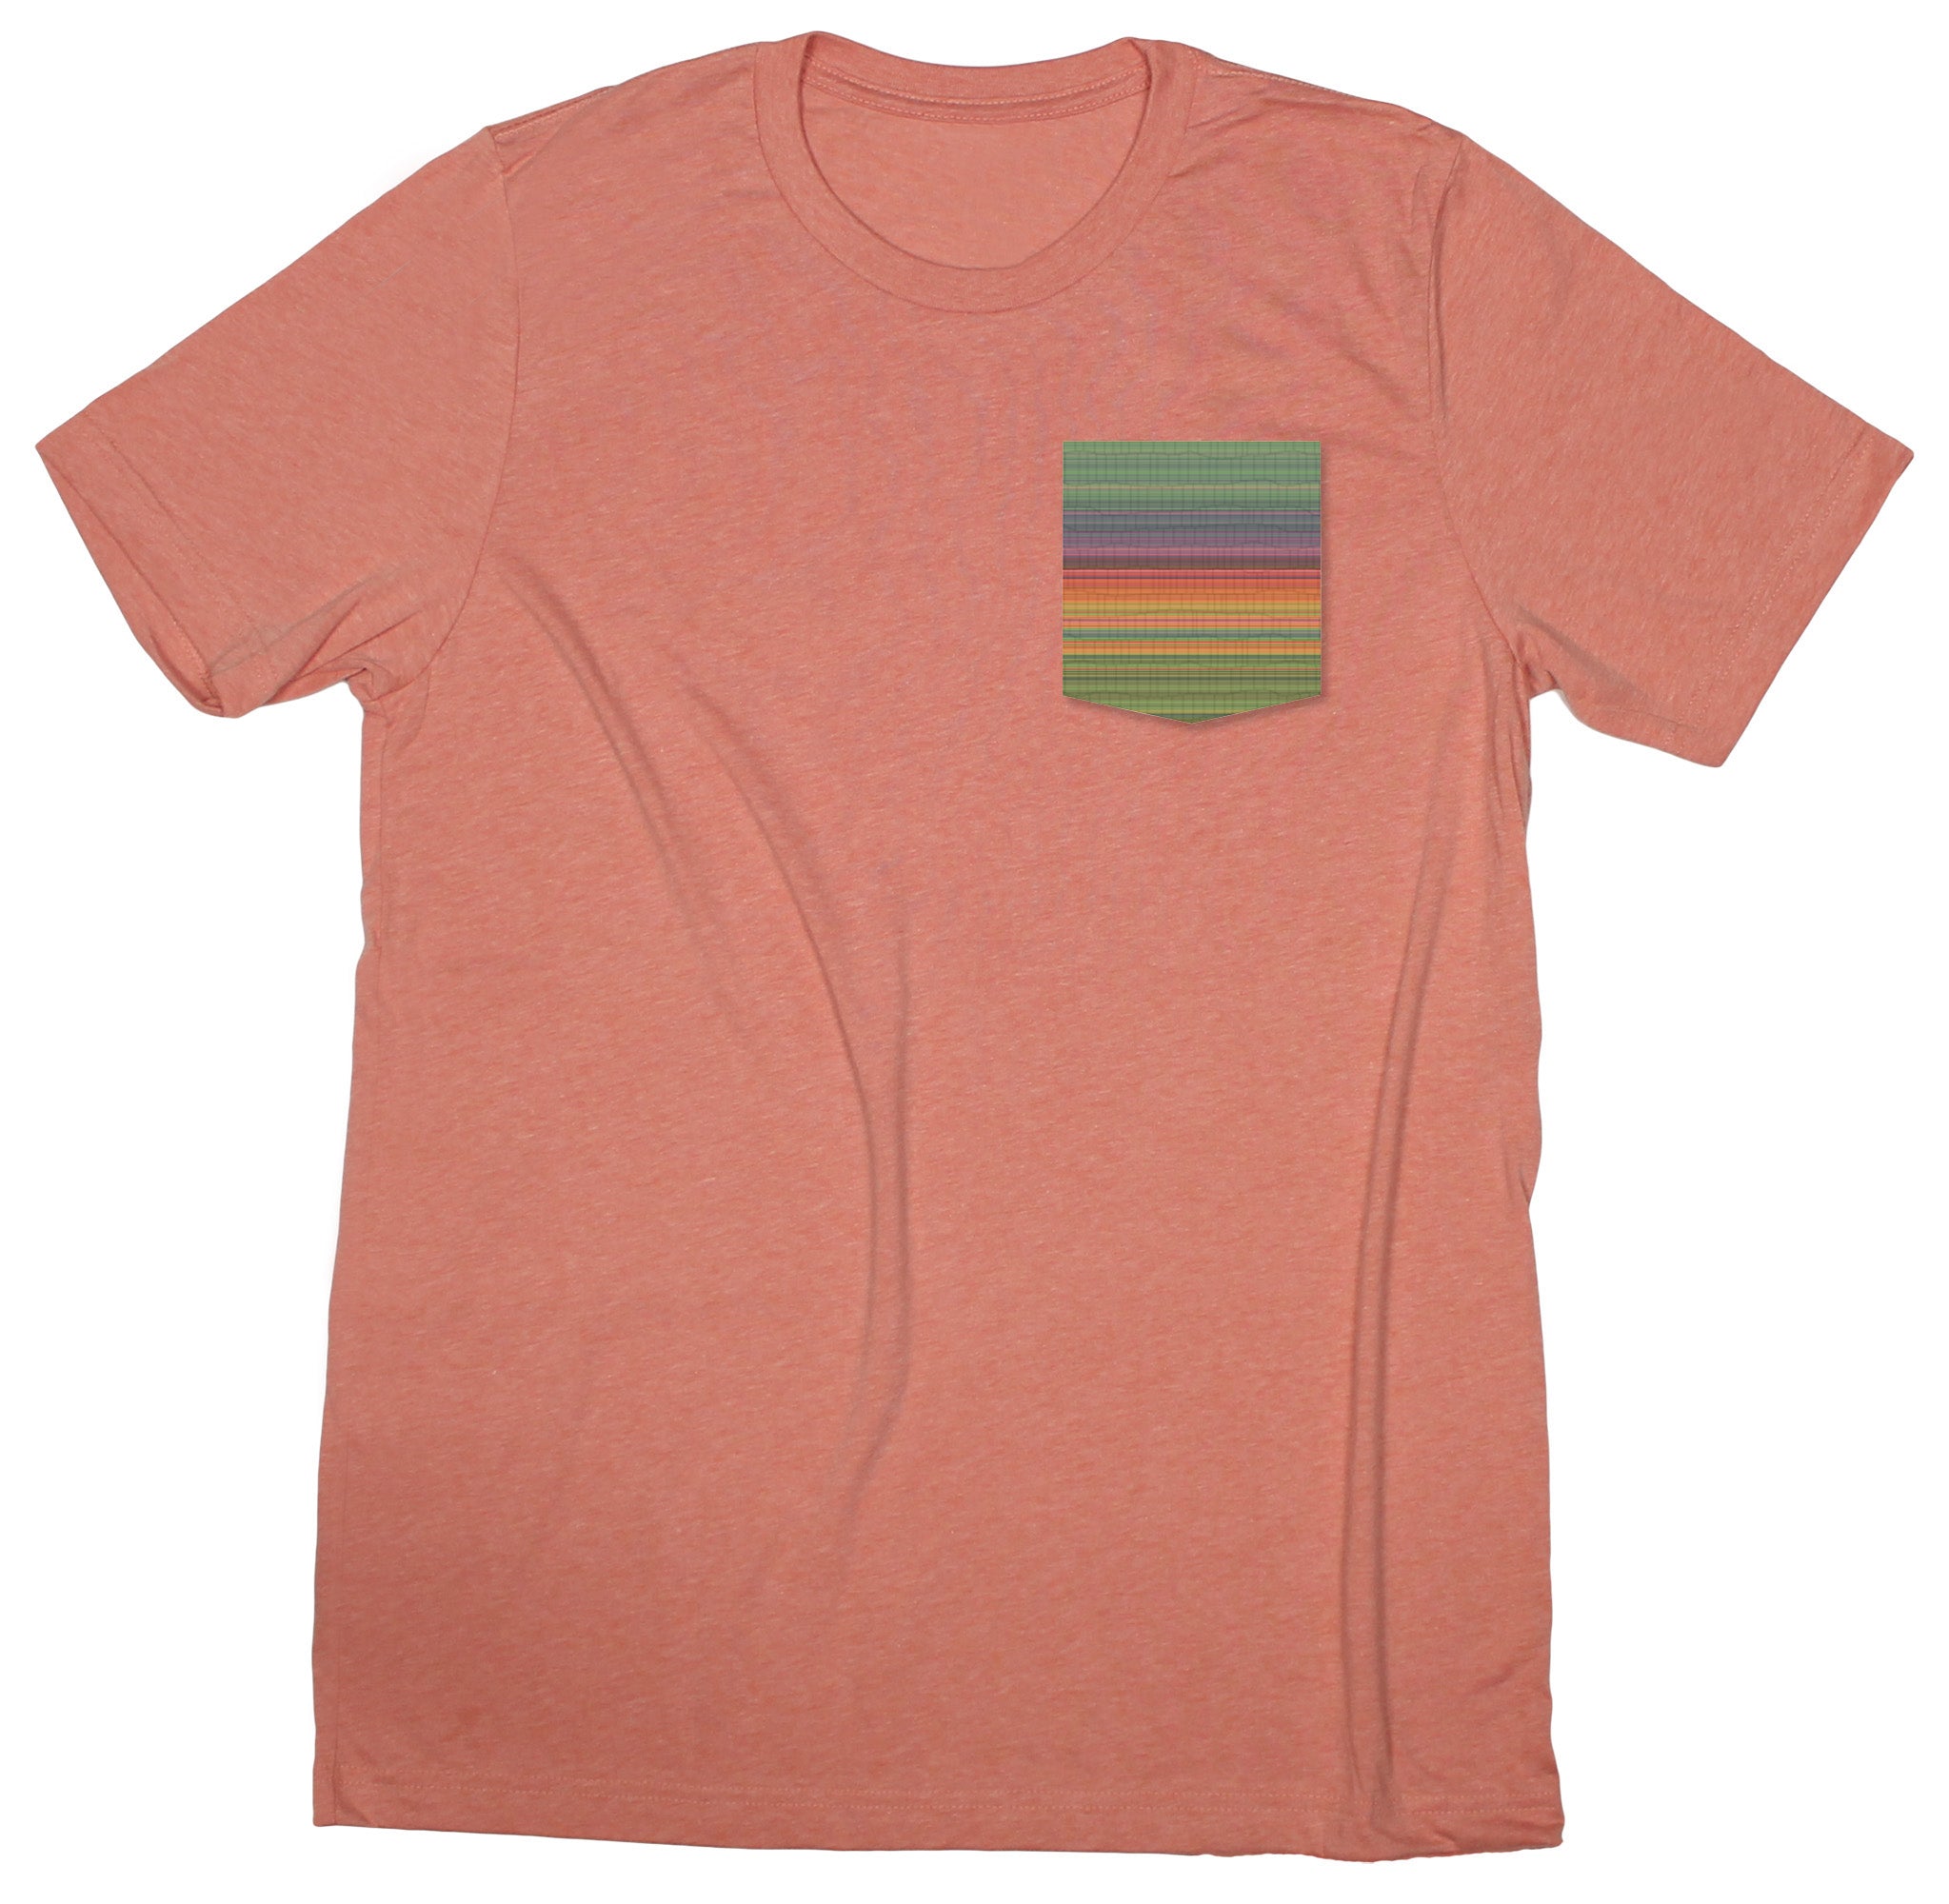 Coastal Life: Retro Sunset Stripe Pocket T-shirt